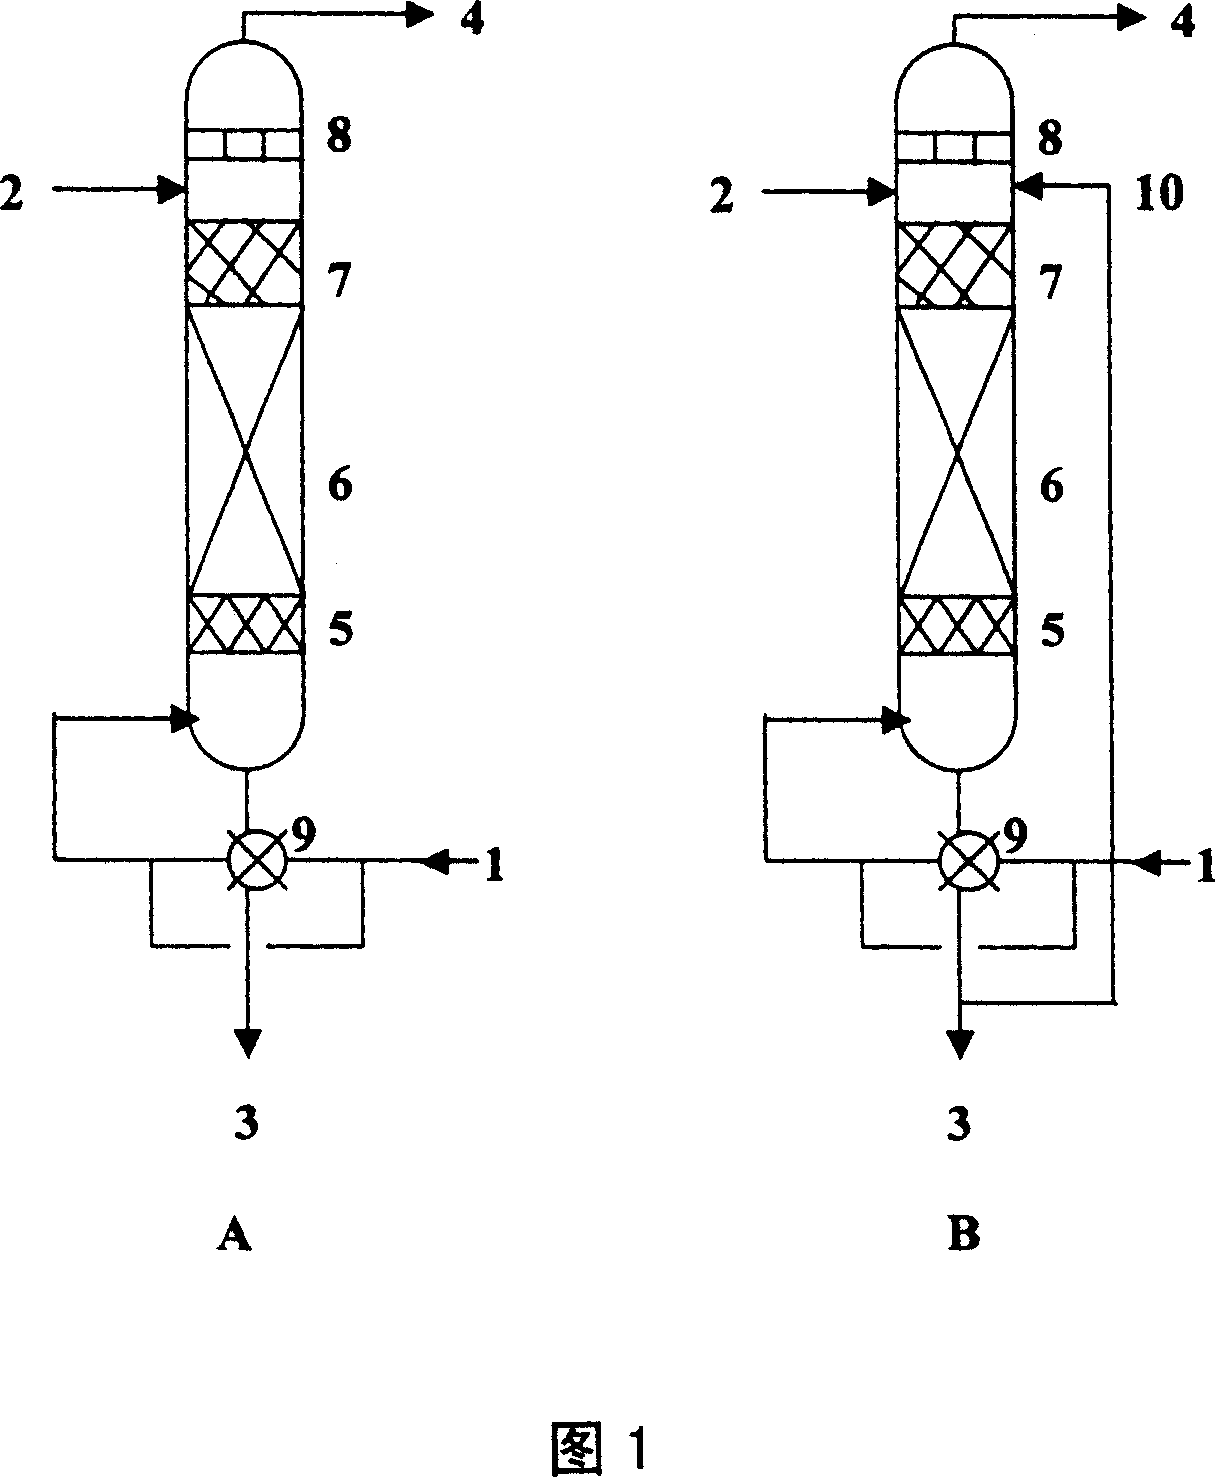 Method of preparing ethyl benzene by saparating ethene and benzene under dry gas of catalysis